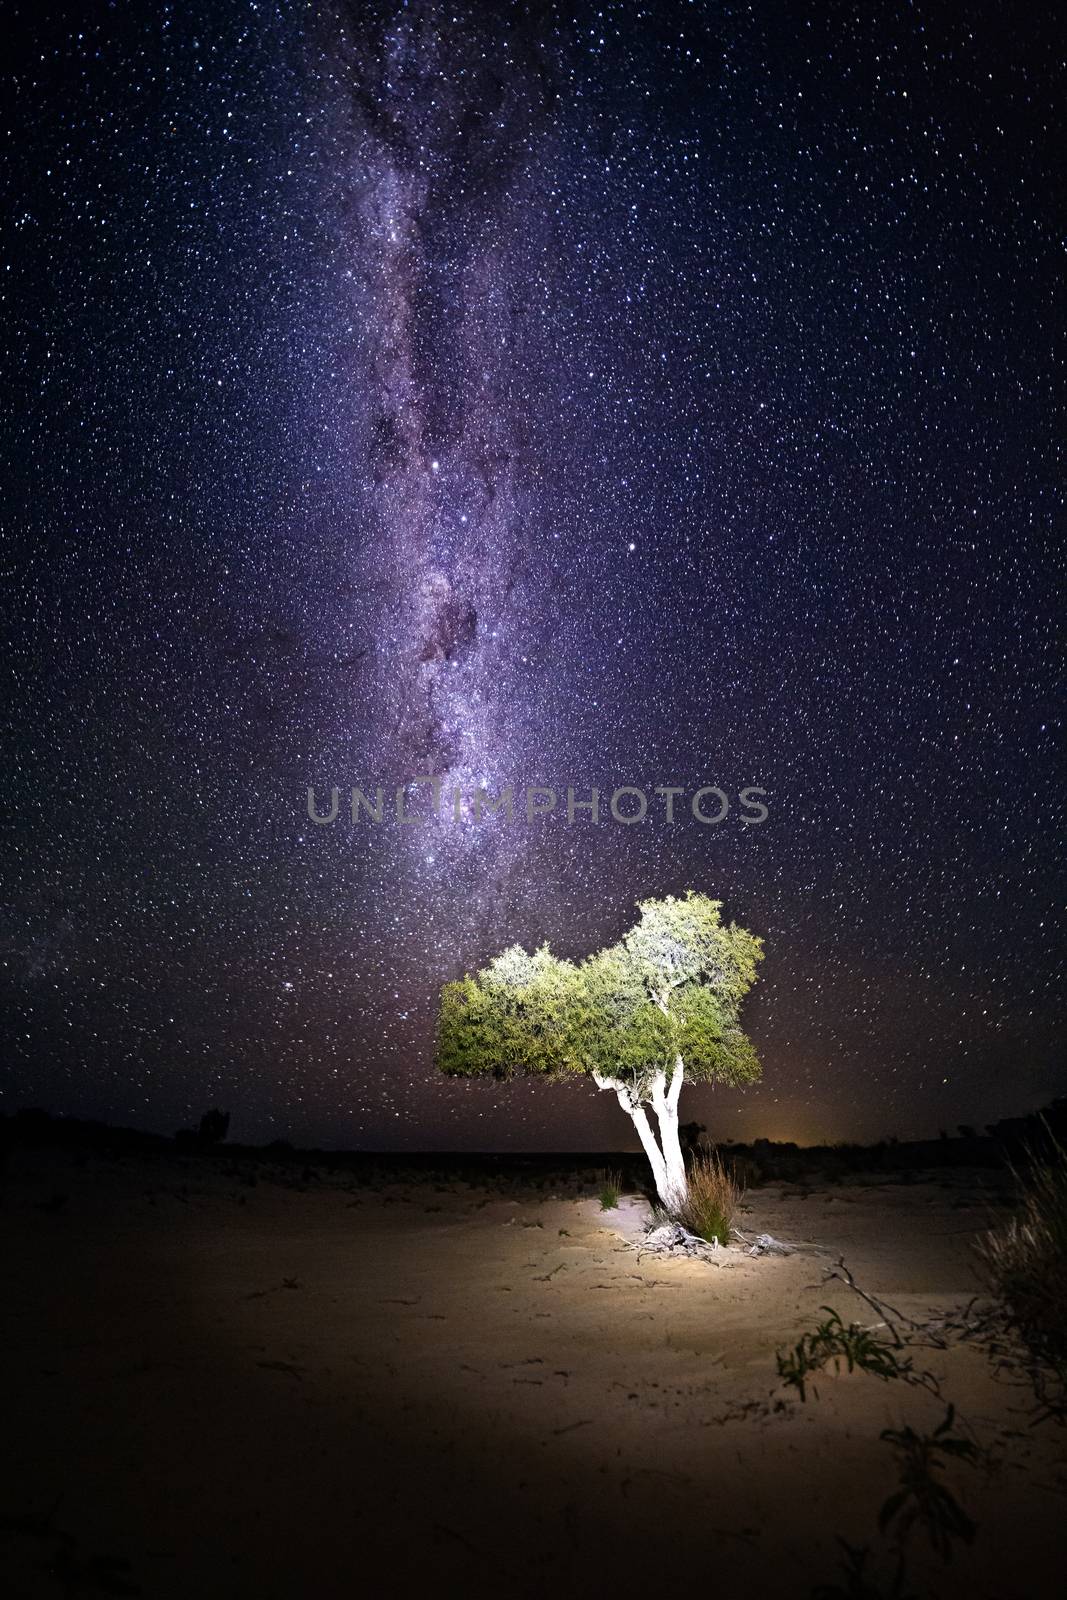 Desert tree under night sky milky way universe by lovleah